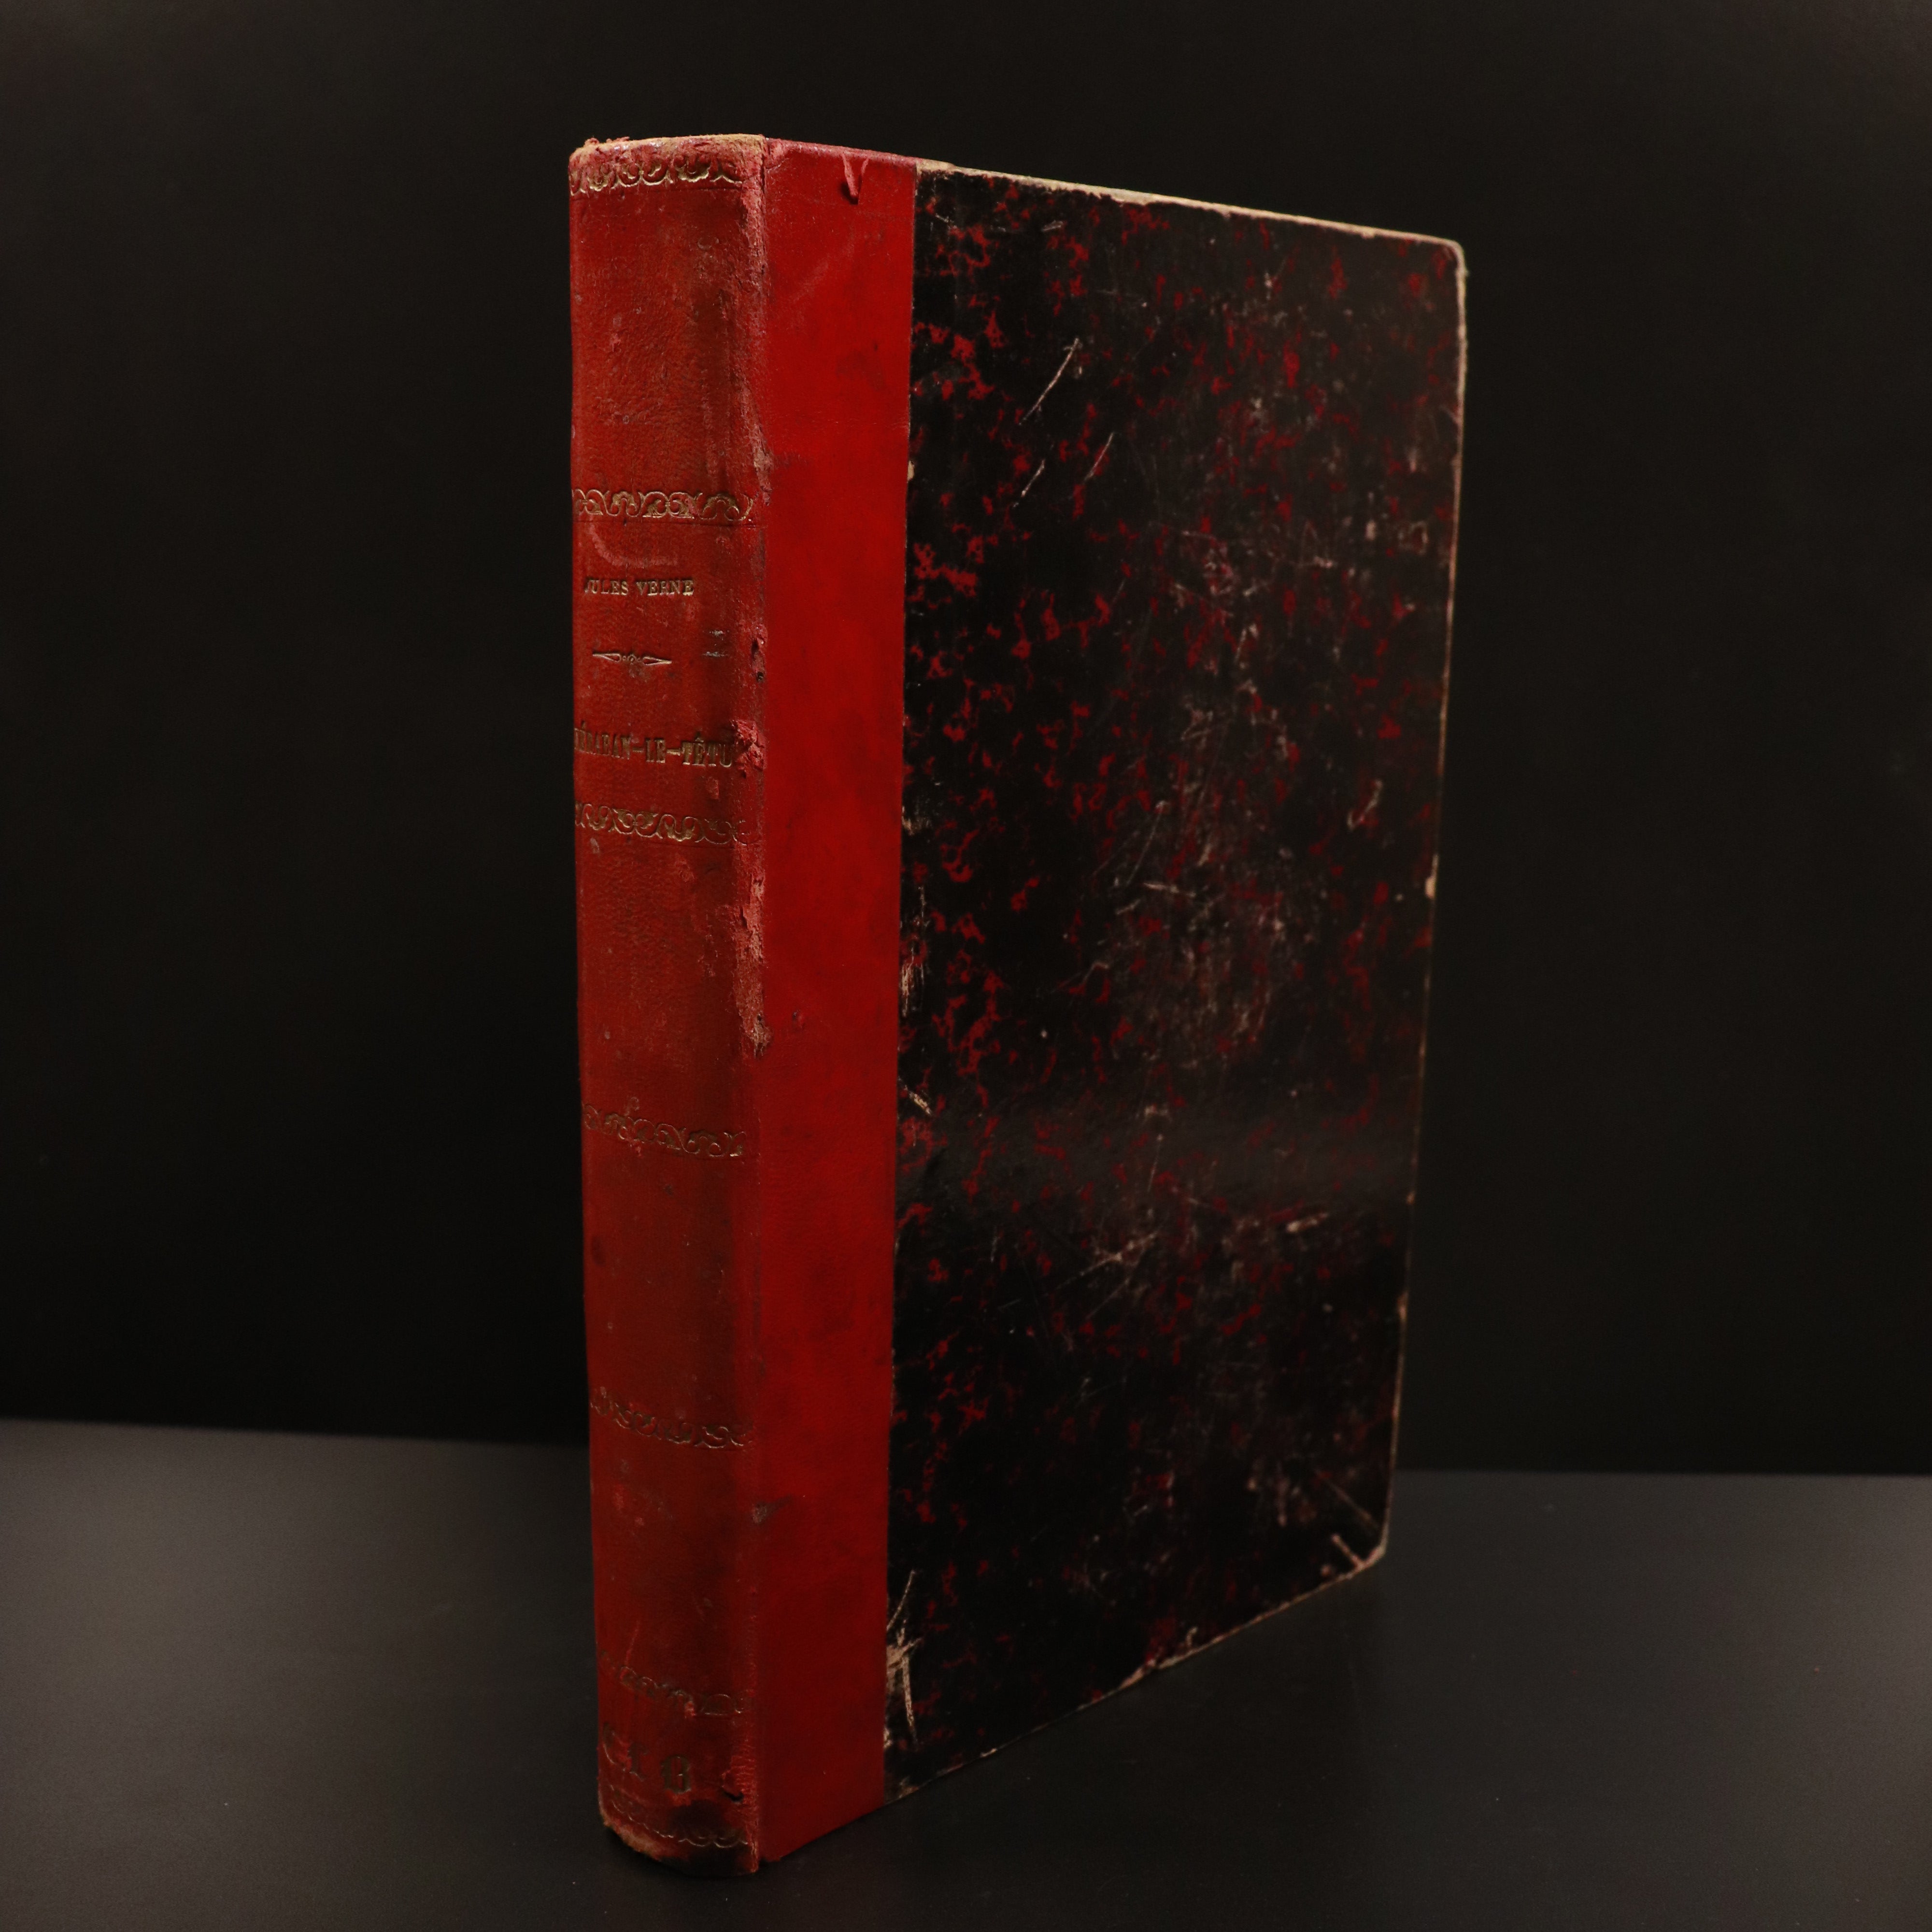 c1880 Keraban Le Tetu Jules Verne Antiquarian French Fiction Book